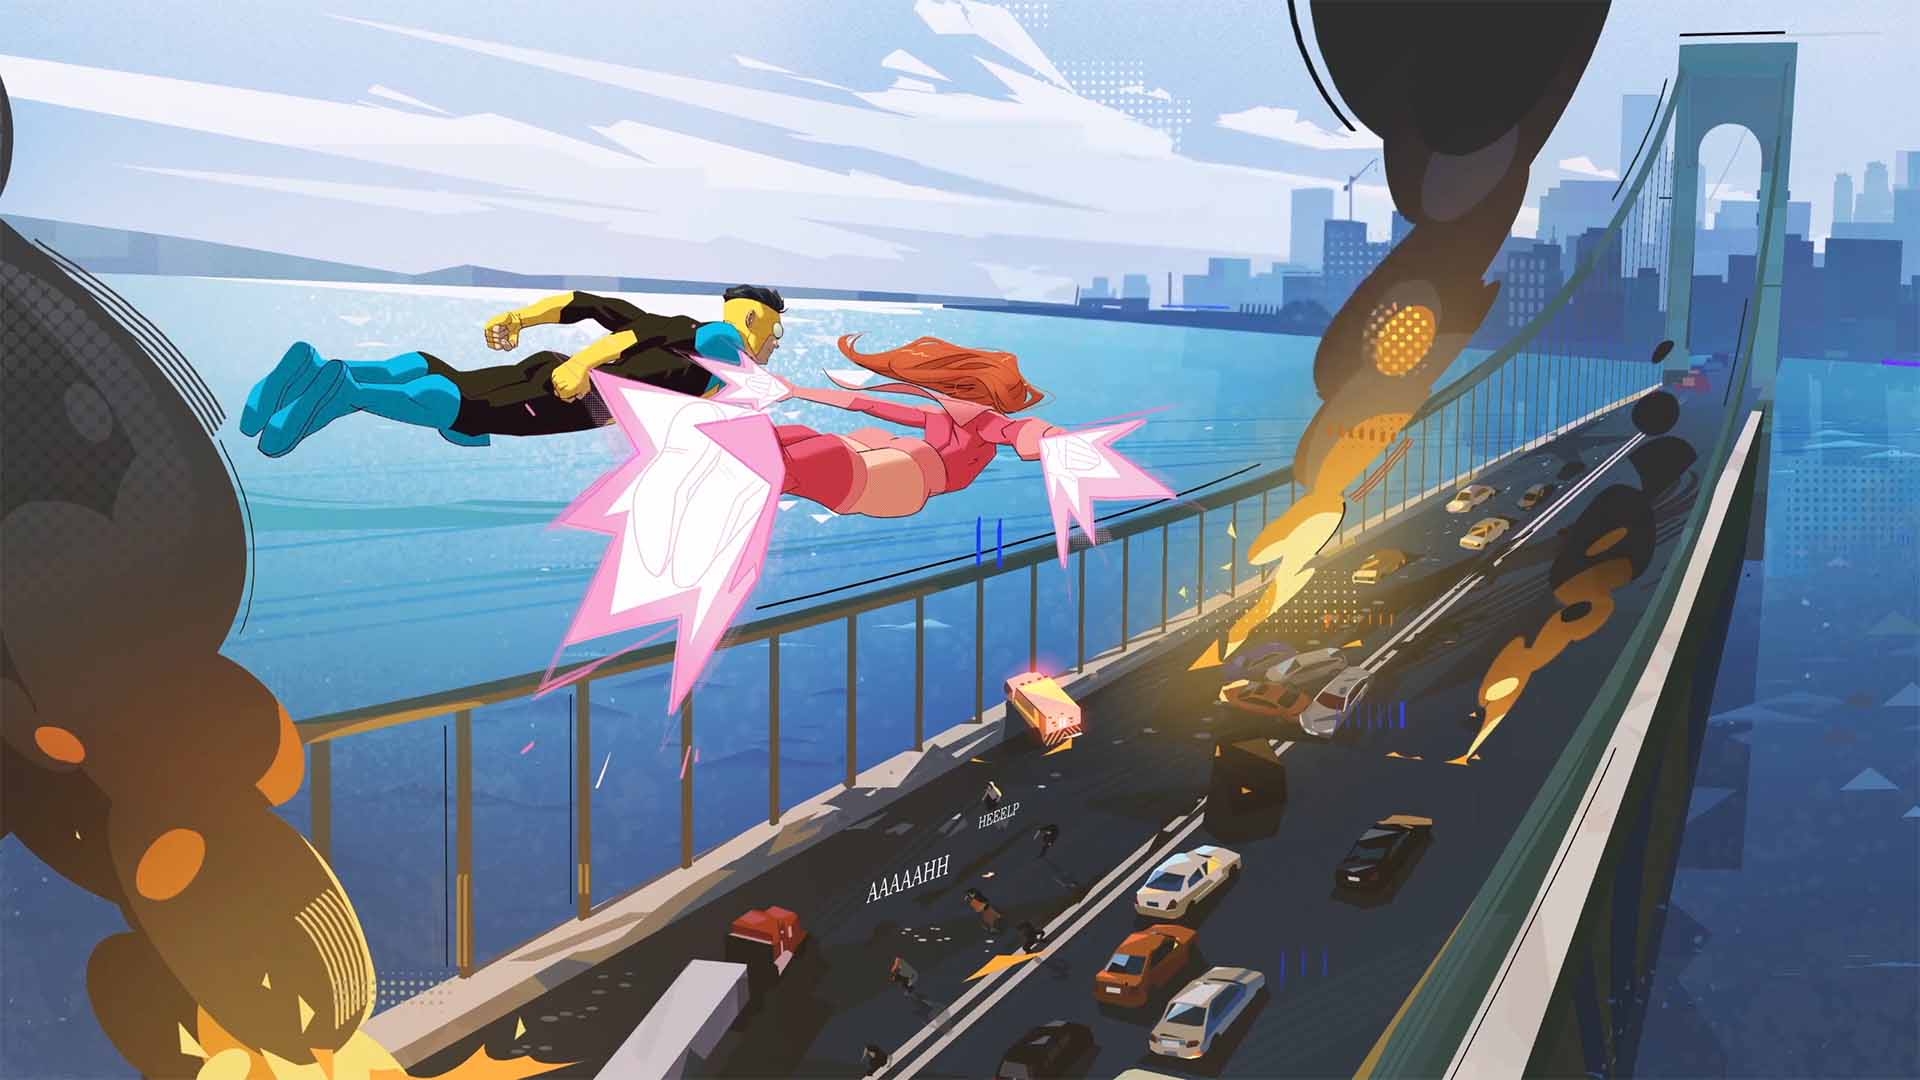 s animated superhero series Invincible features superstar